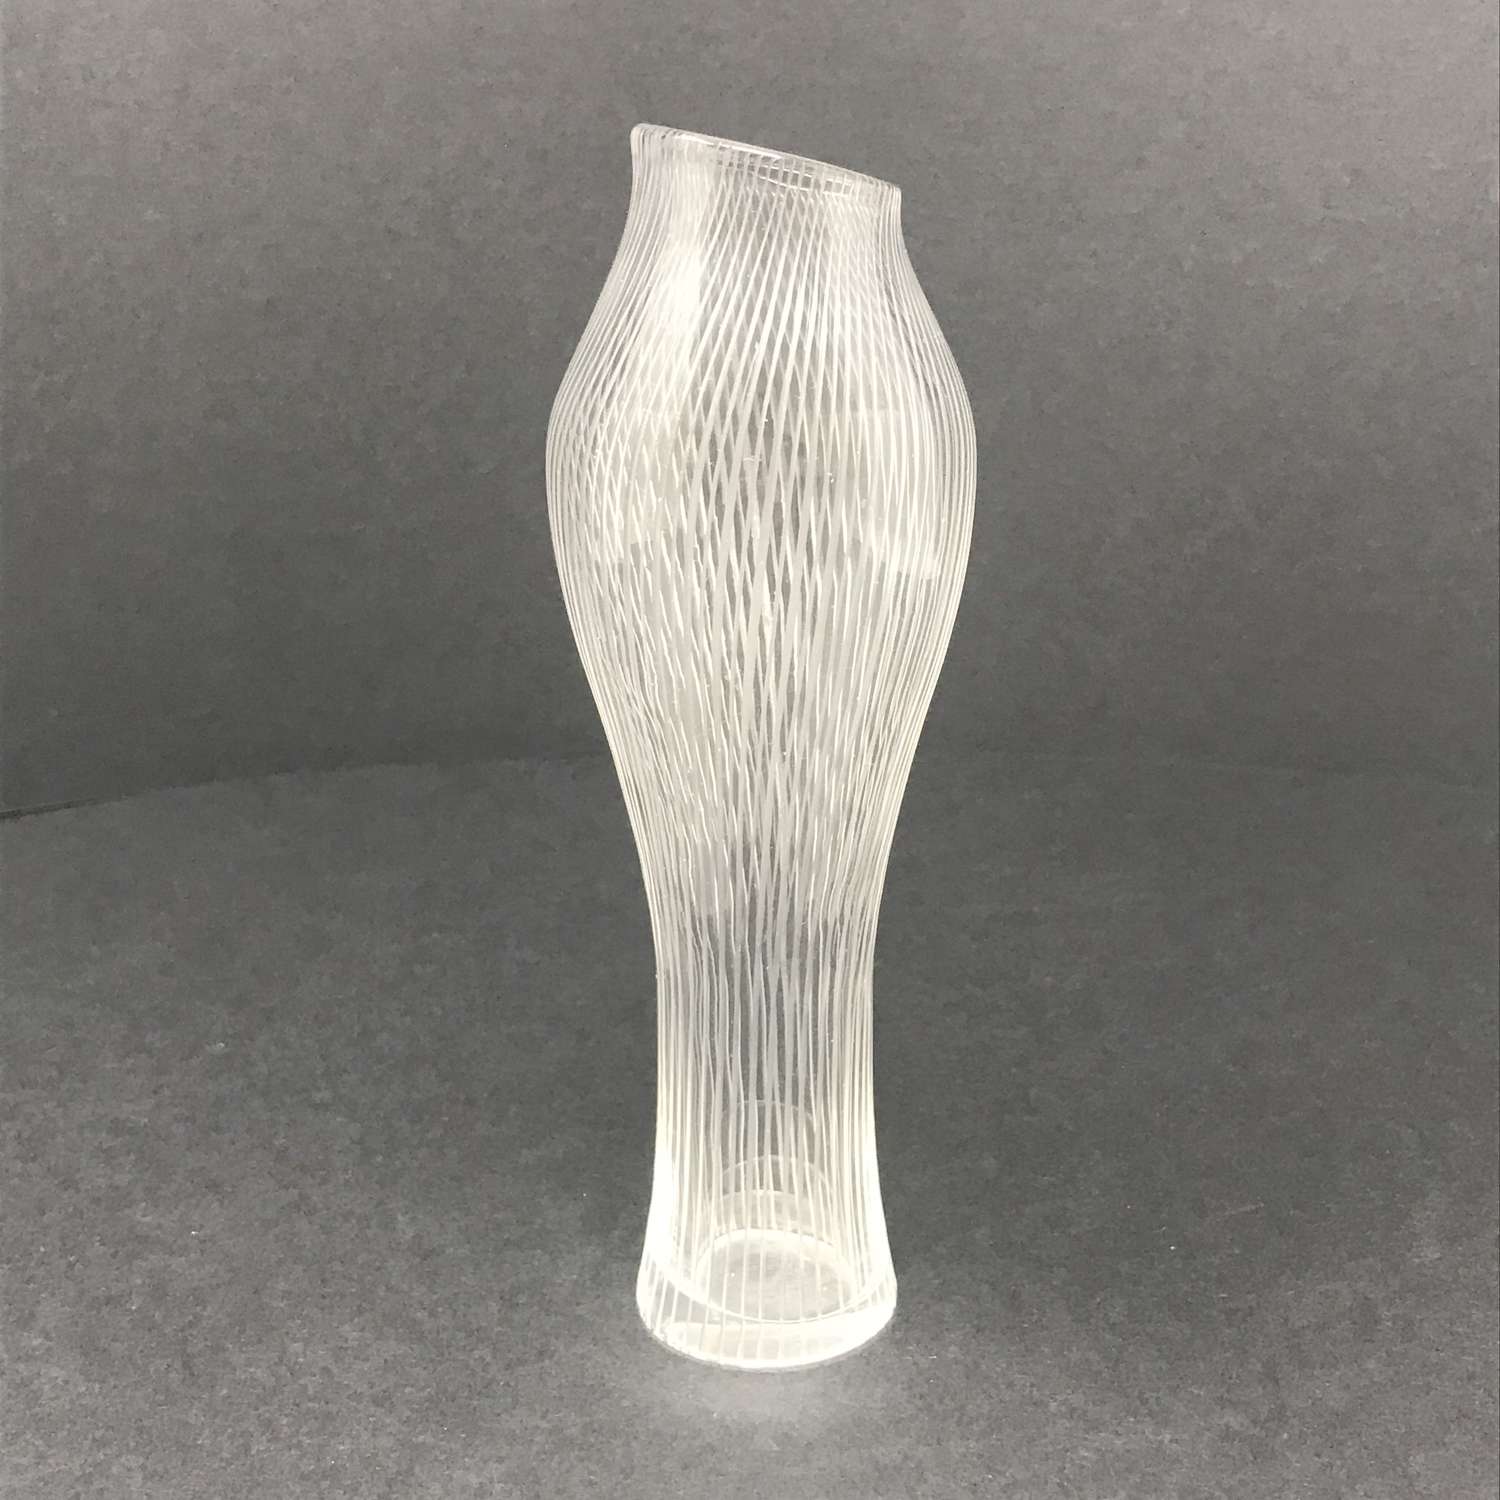 Tapio Wirkkala small organic shaped glass vase Iittala, Finland